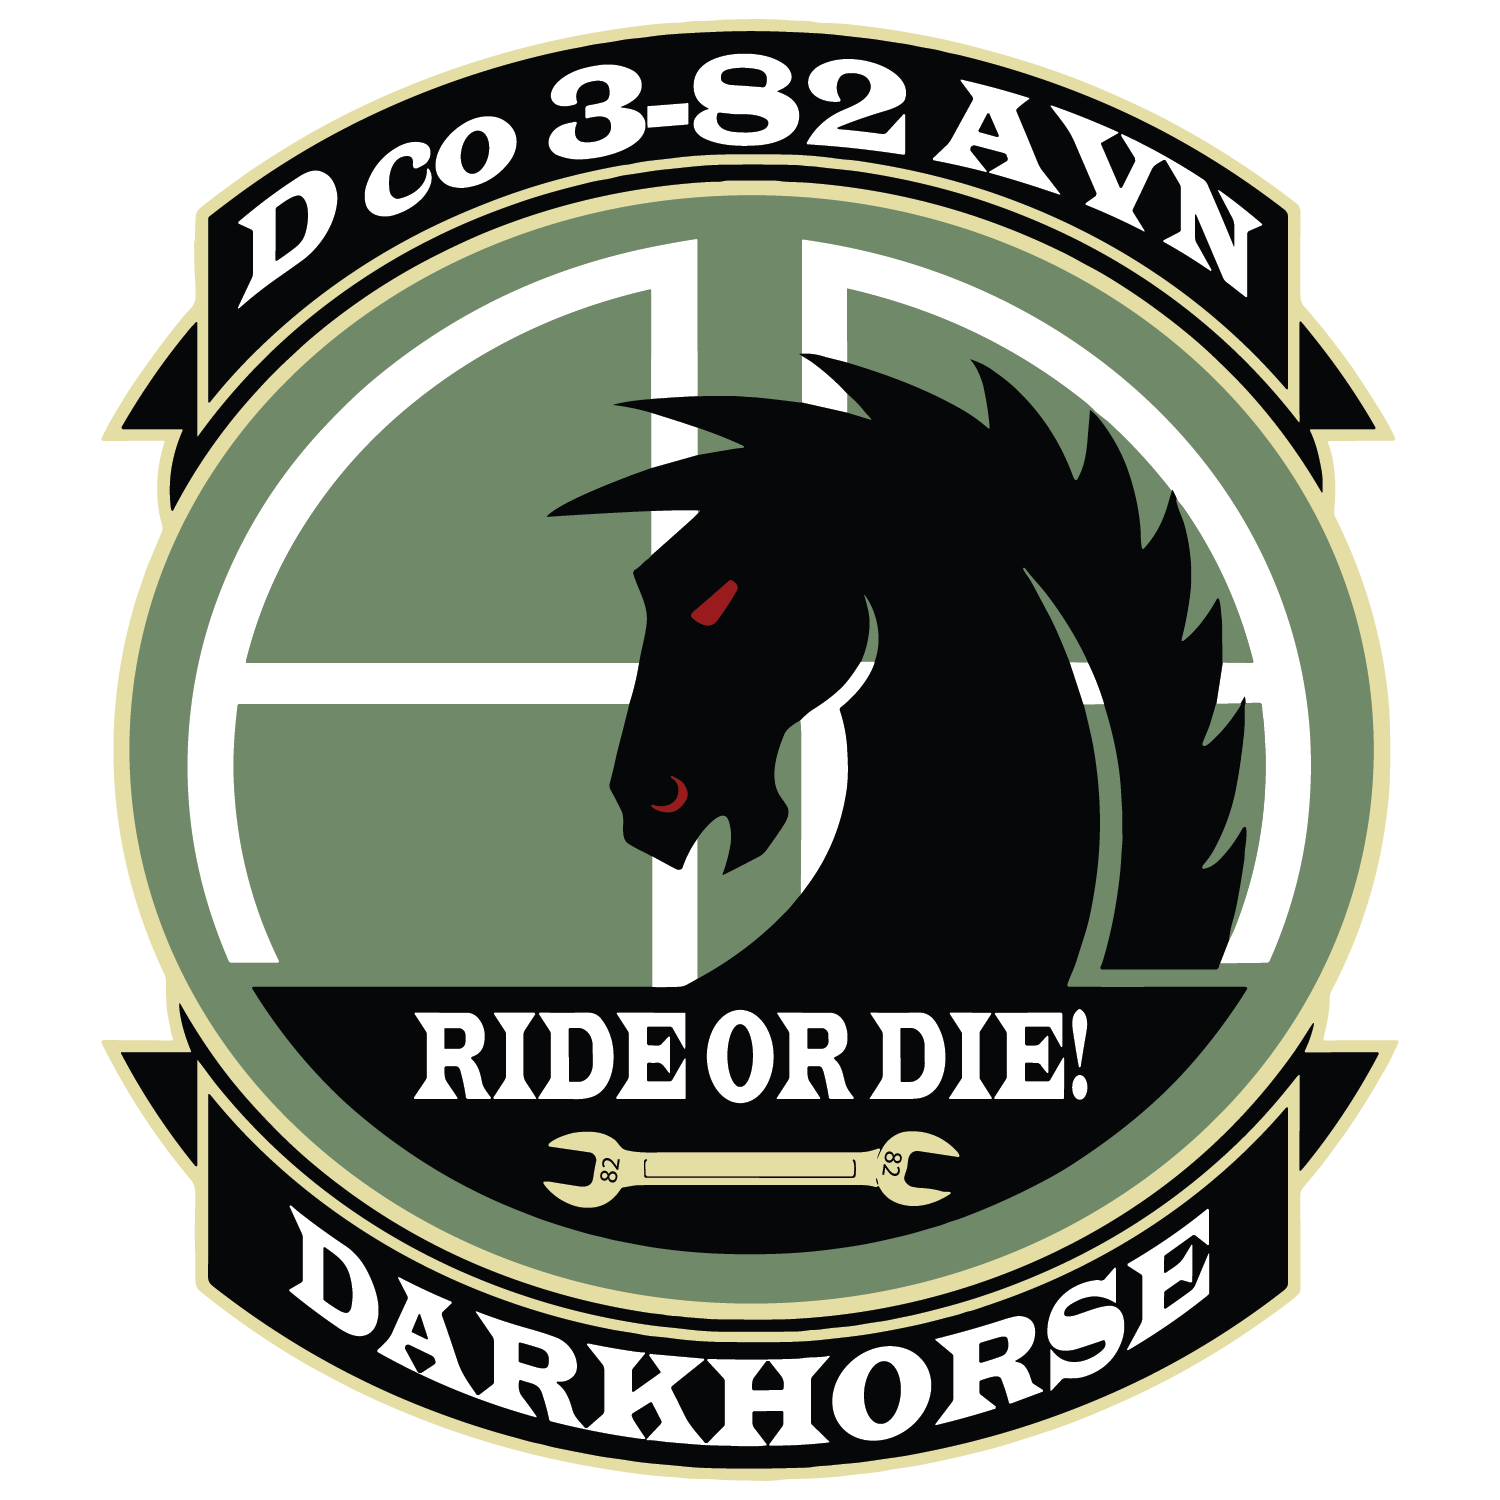 D Co, 3-82 GSAB "Darkhorse"